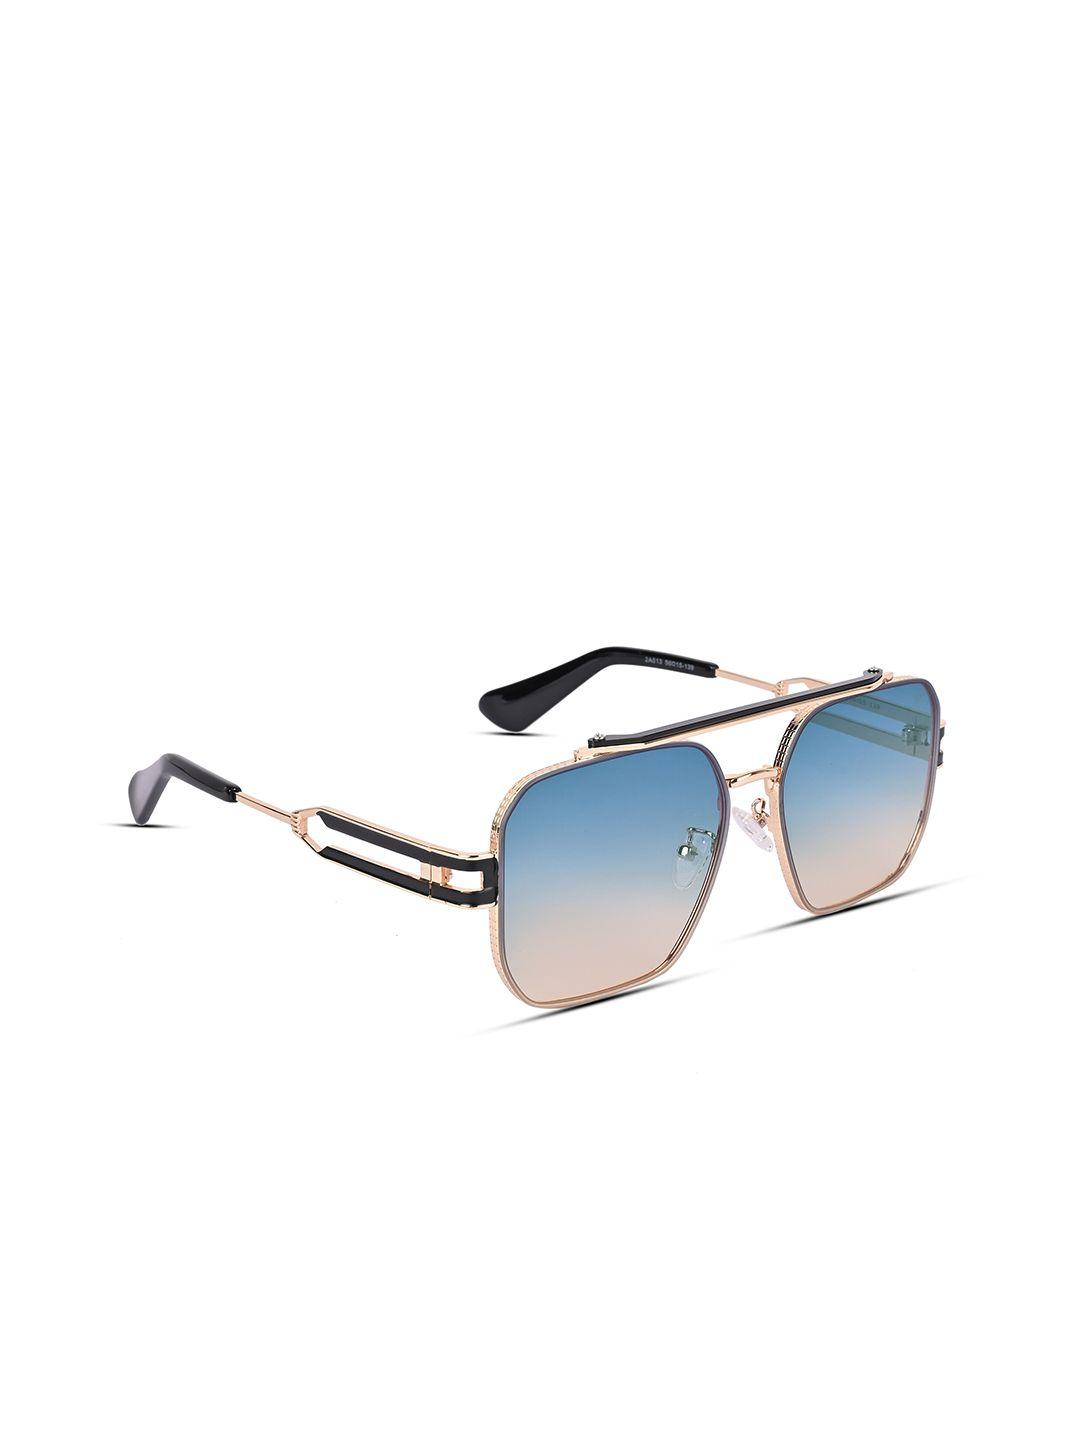 voyage unisex blue lens & gold-toned wayfarer sunglasses with uv protected lens